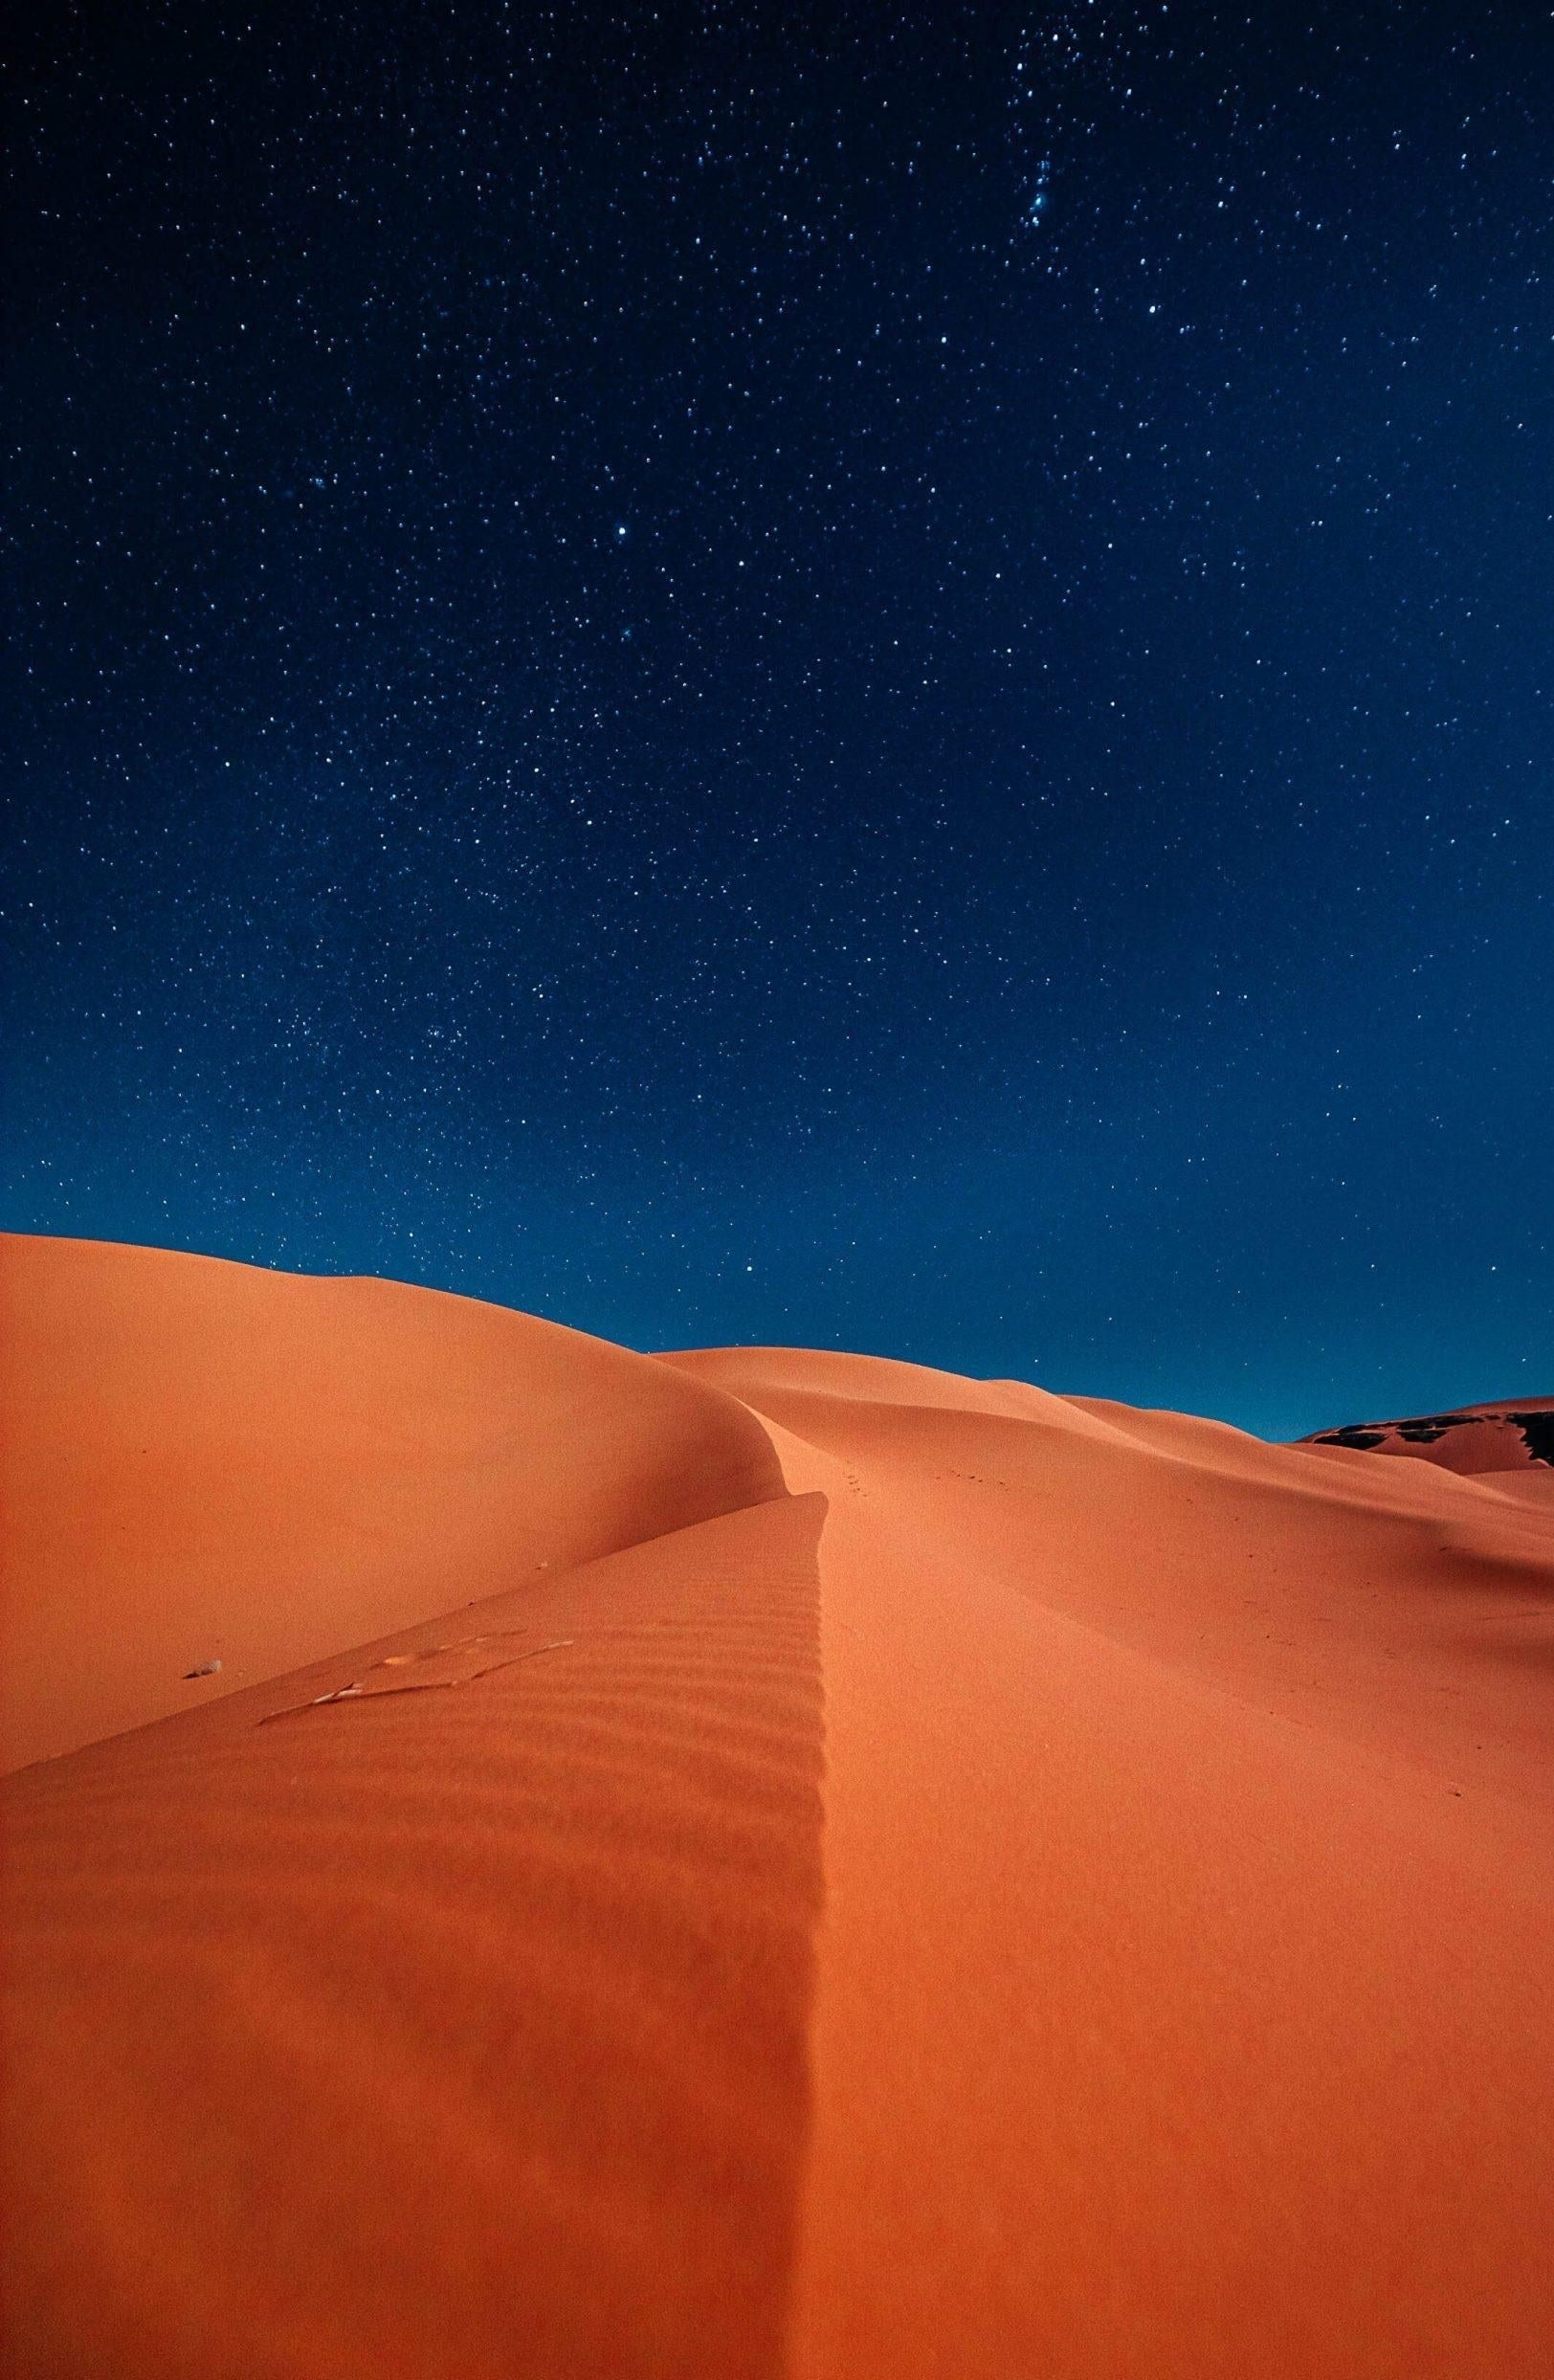 The Sahara desert at night.